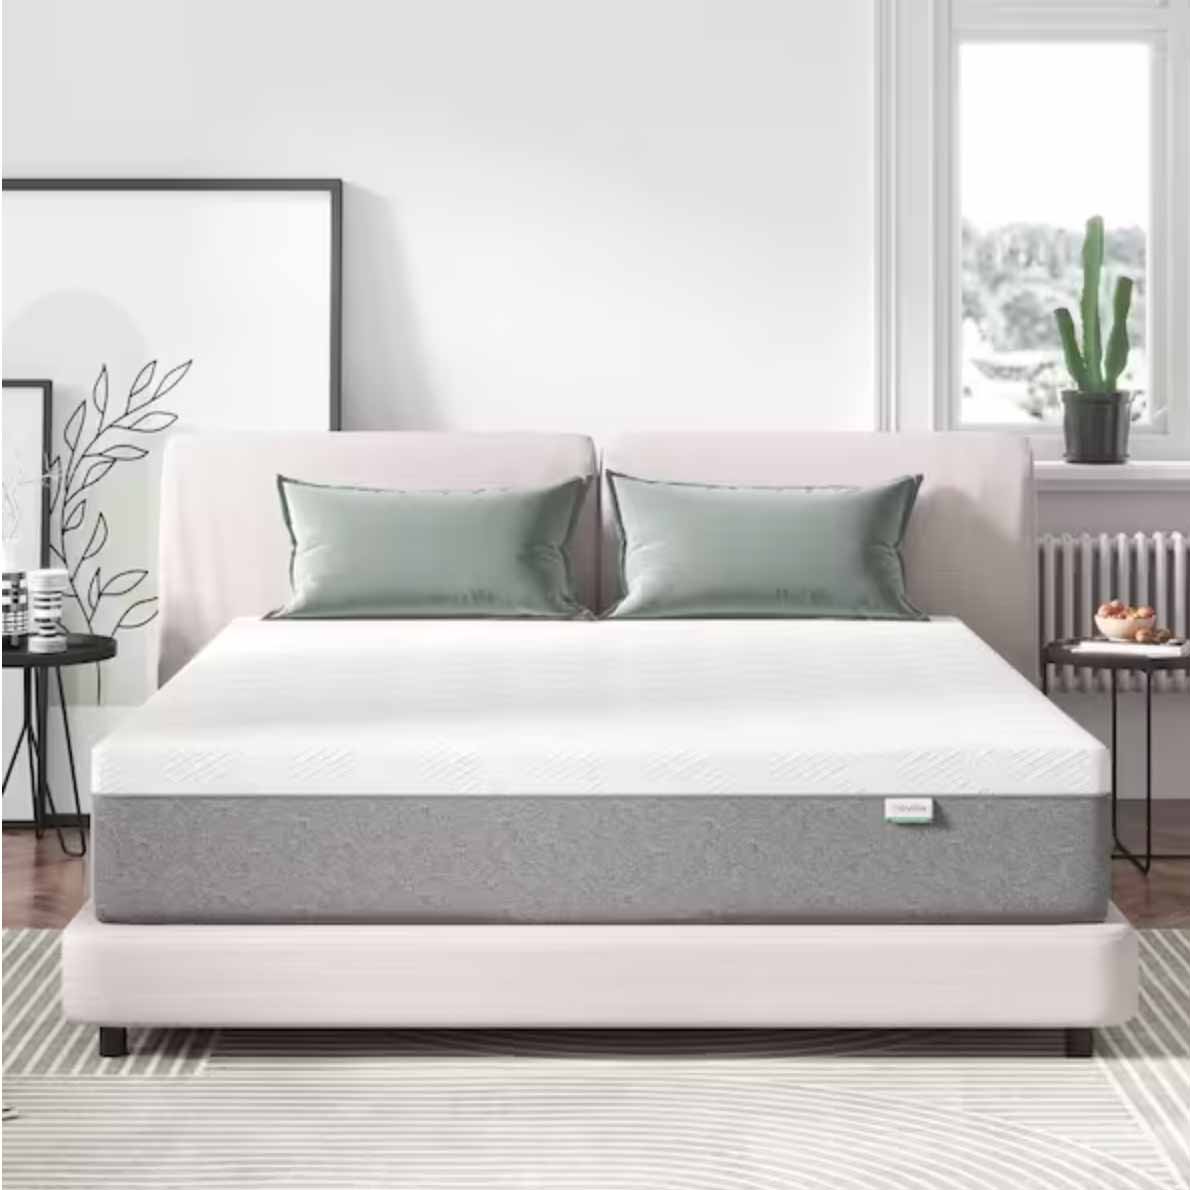 Gel memory foam queen mattress on a light grey bed frame with two silk pillows